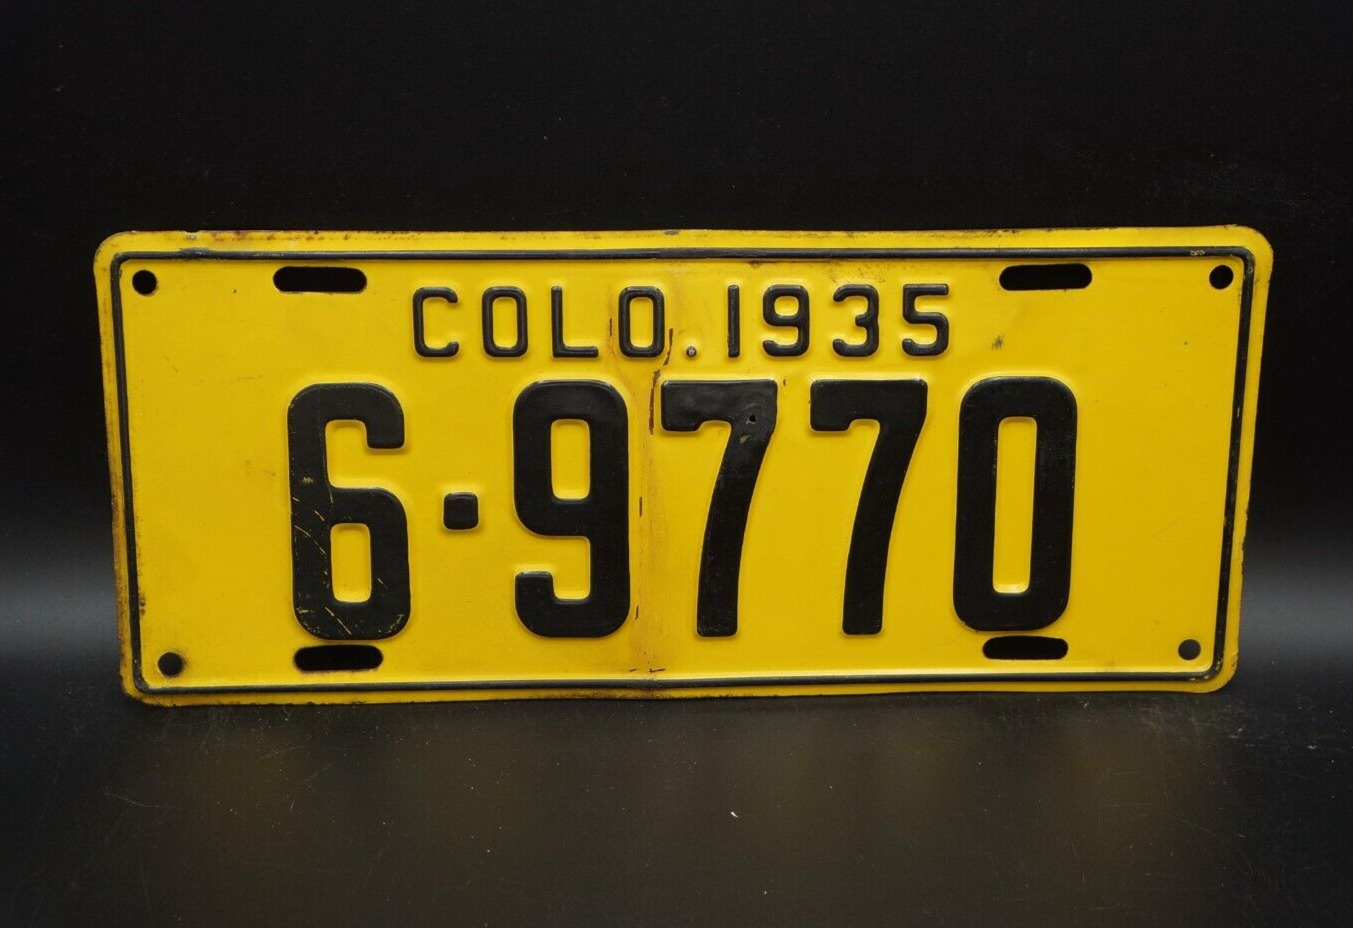 1935 COLORADO Passenger License Plate # 6 - 9770